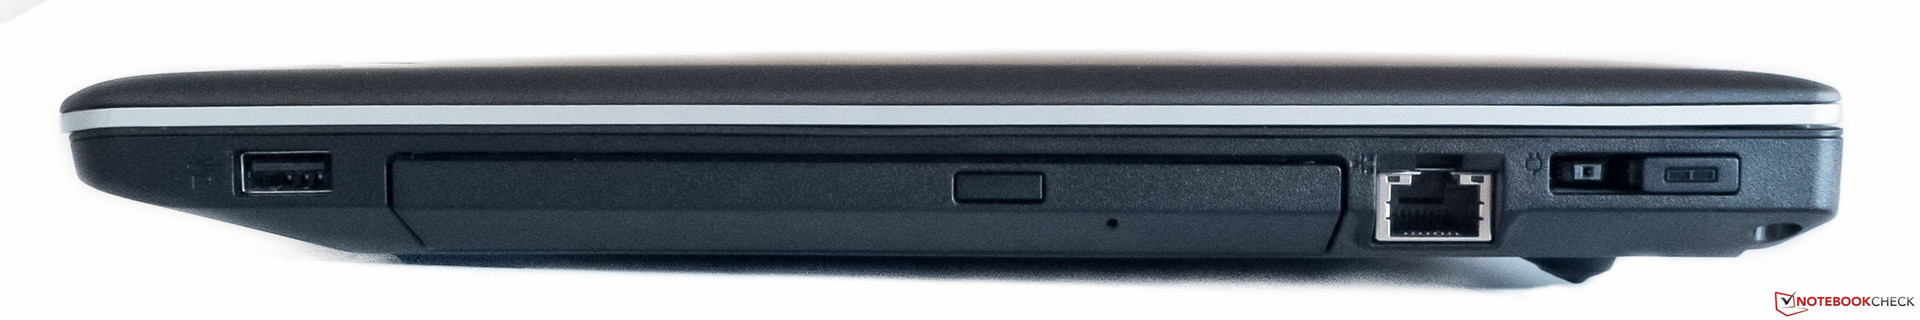 Review Lenovo Thinkpad Edge E540 c Notebook Notebookcheck Net Reviews